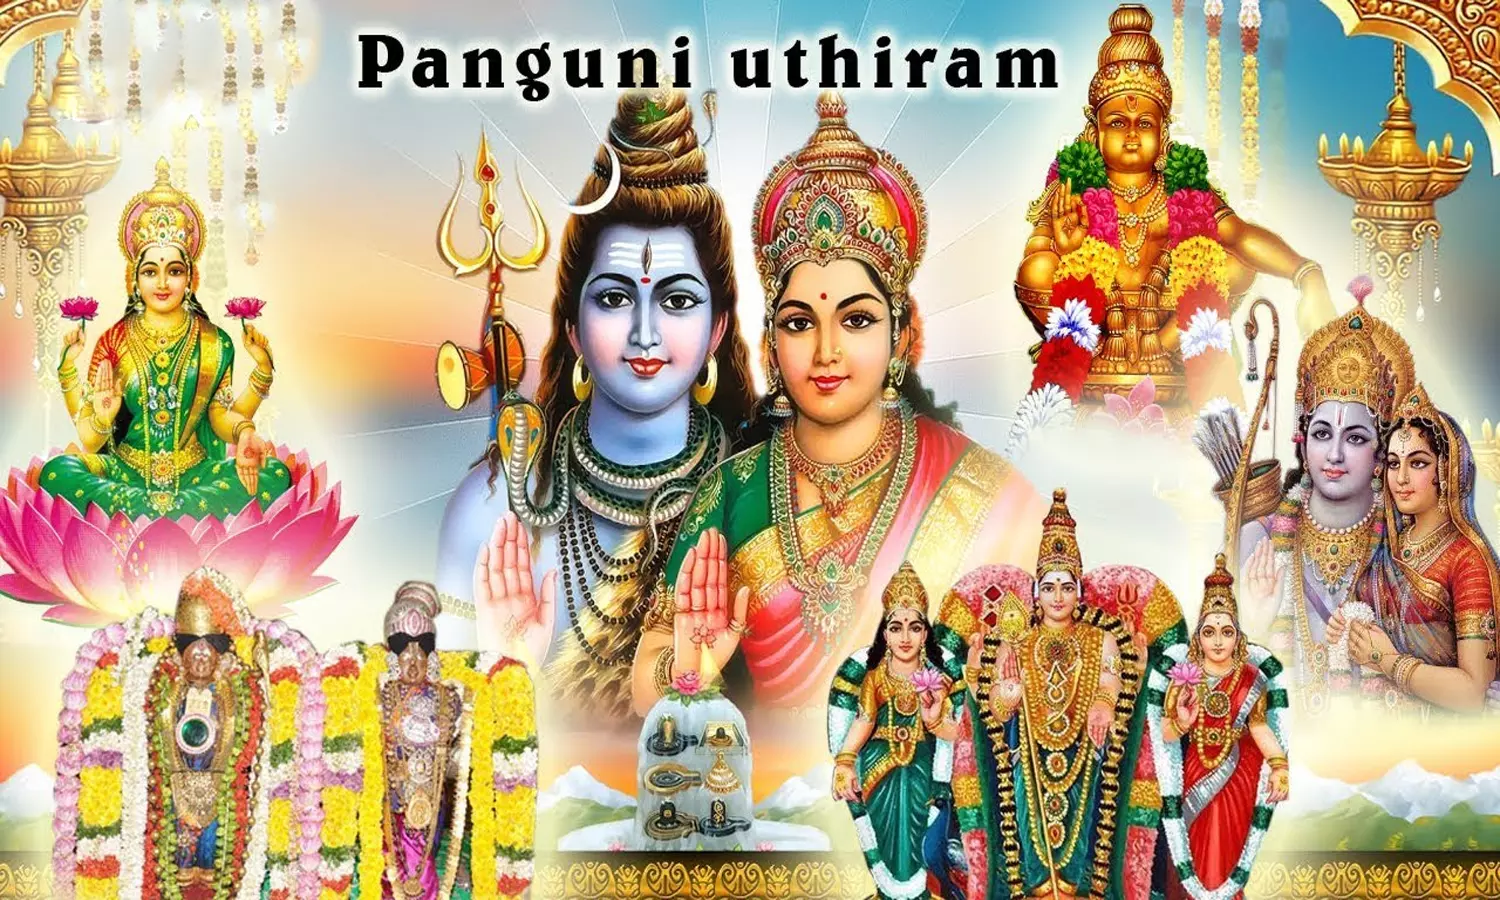 PANGUNI UTHIRAM HISTORY IN TAMIL | பங்குனி உத்தரம் வரலாறு